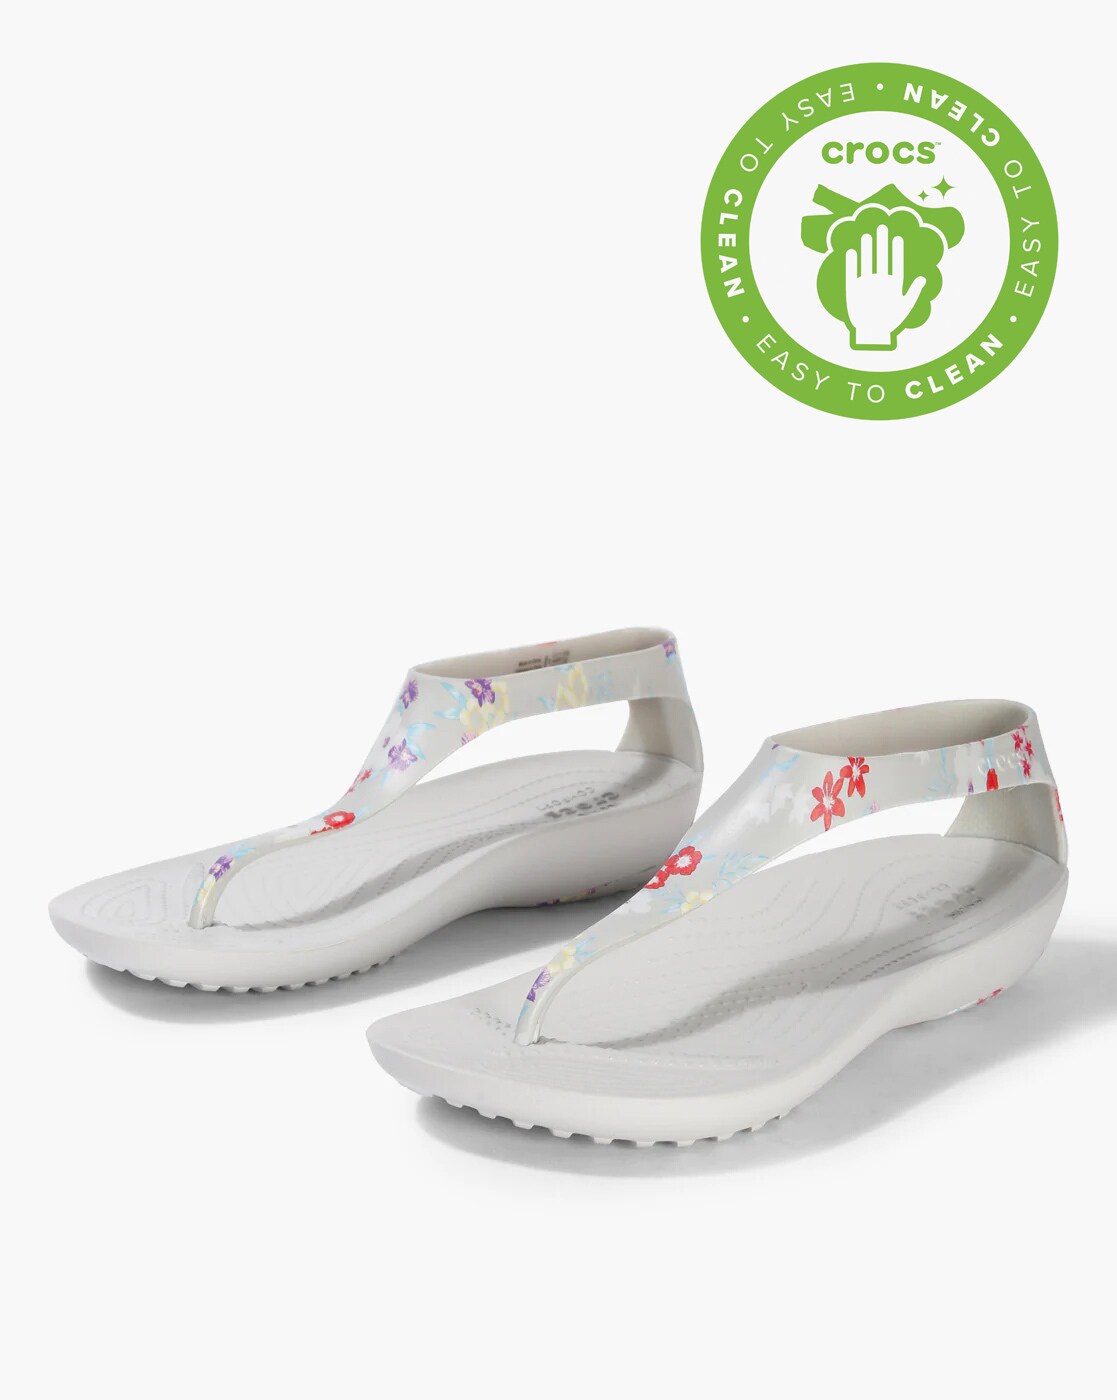 crocs white slippers